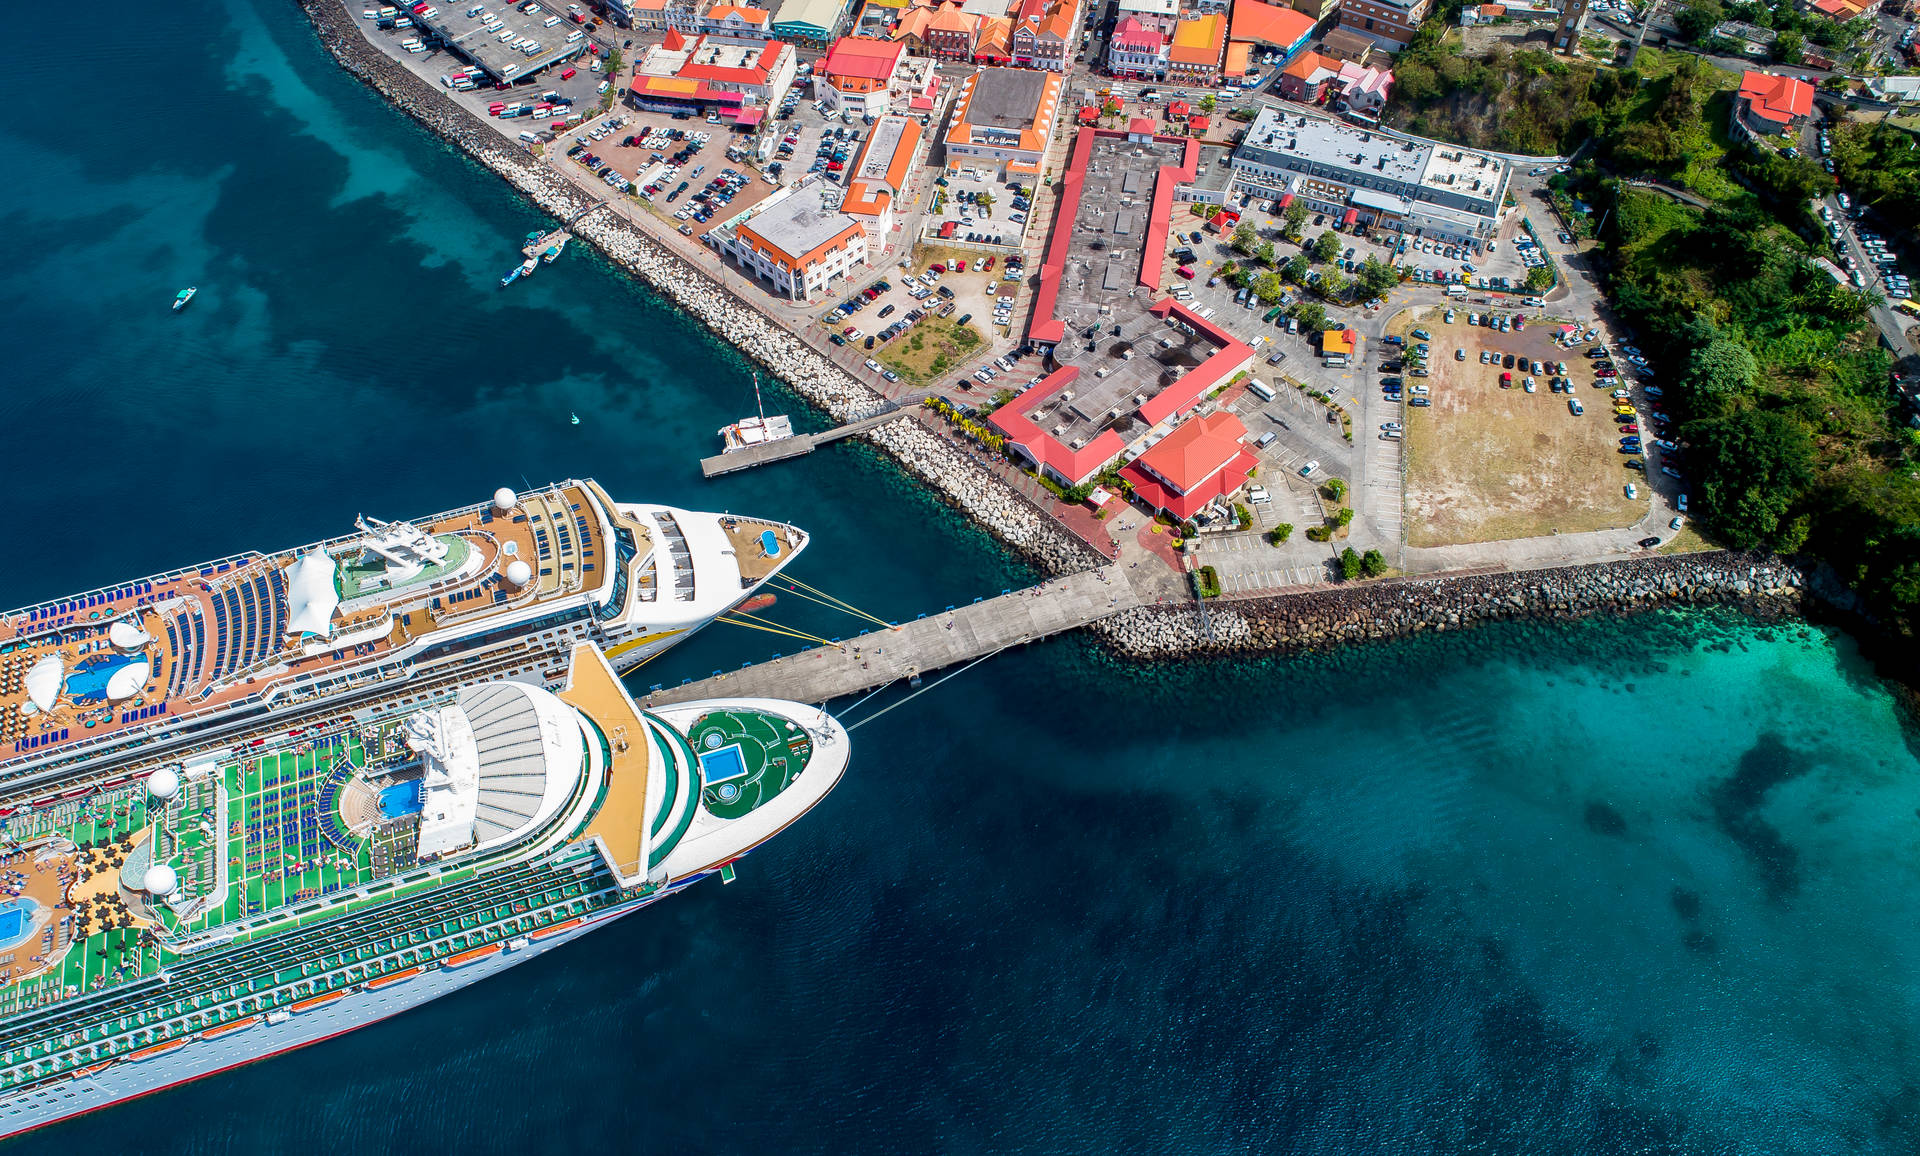 Grenada Cruise Ships Background